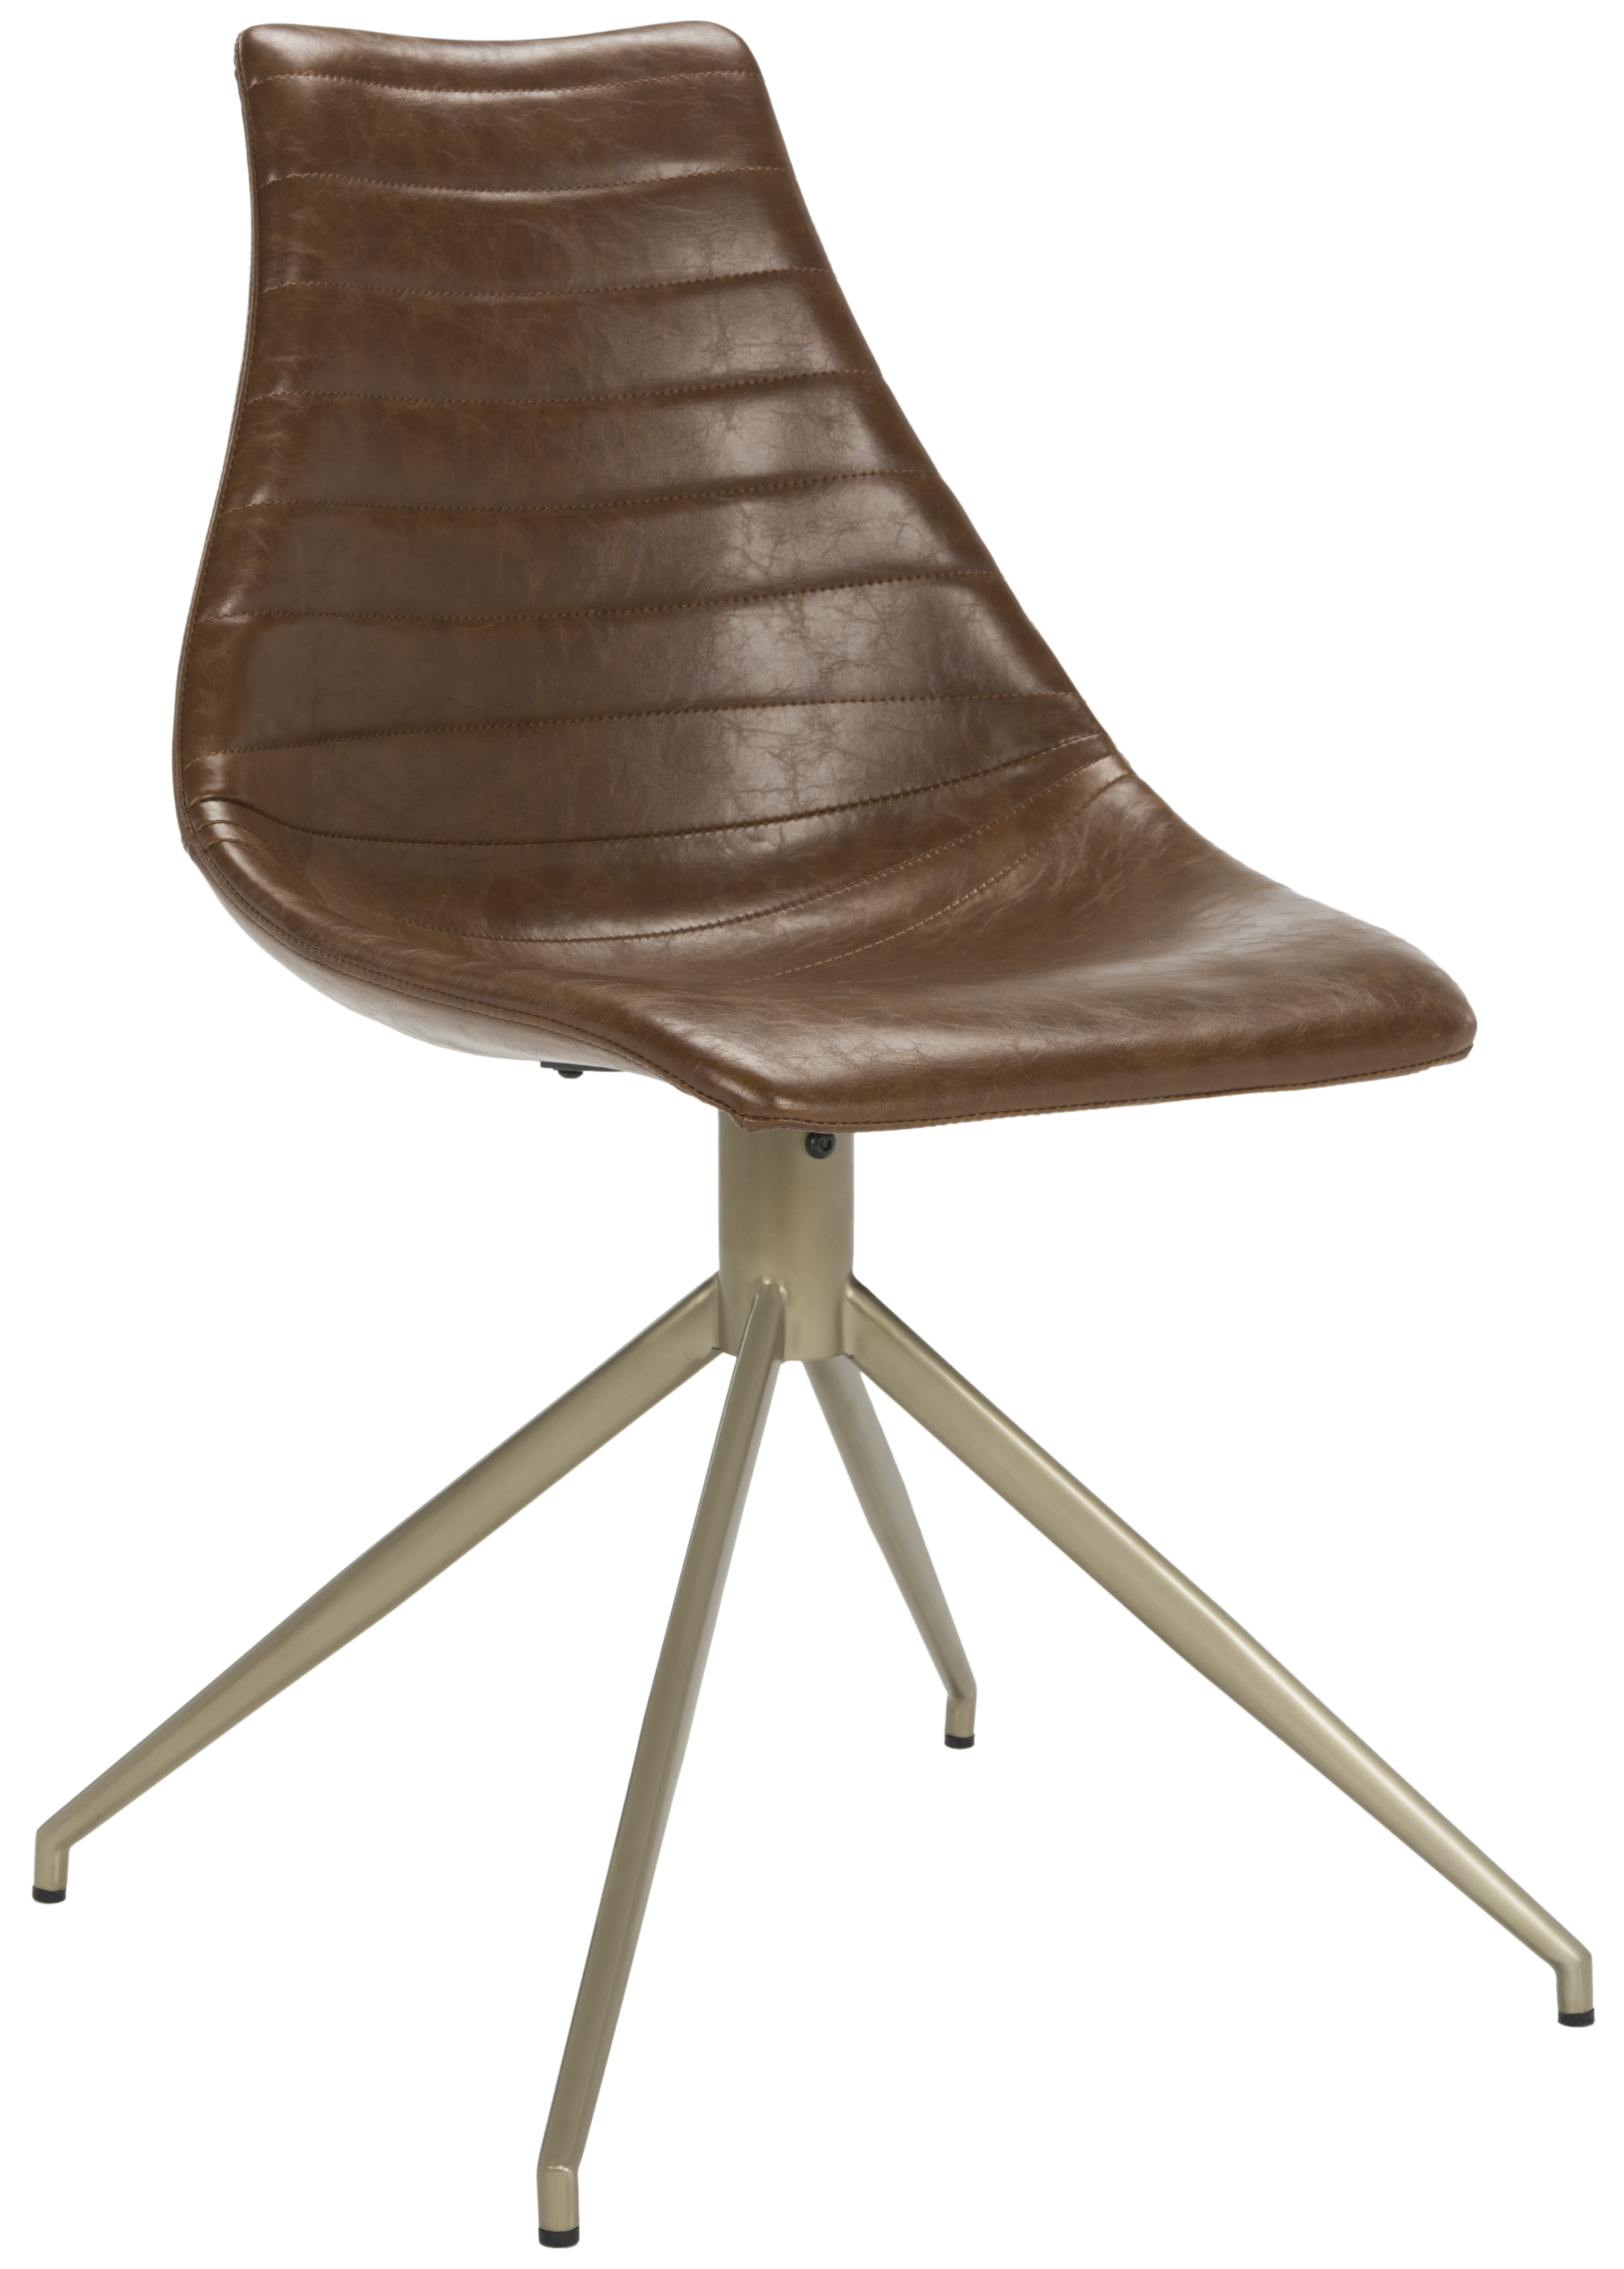 Lynette Midcentury Modern Leather Swivel Dining Chair - Light Brown/Brass - Arlo Home - Image 3